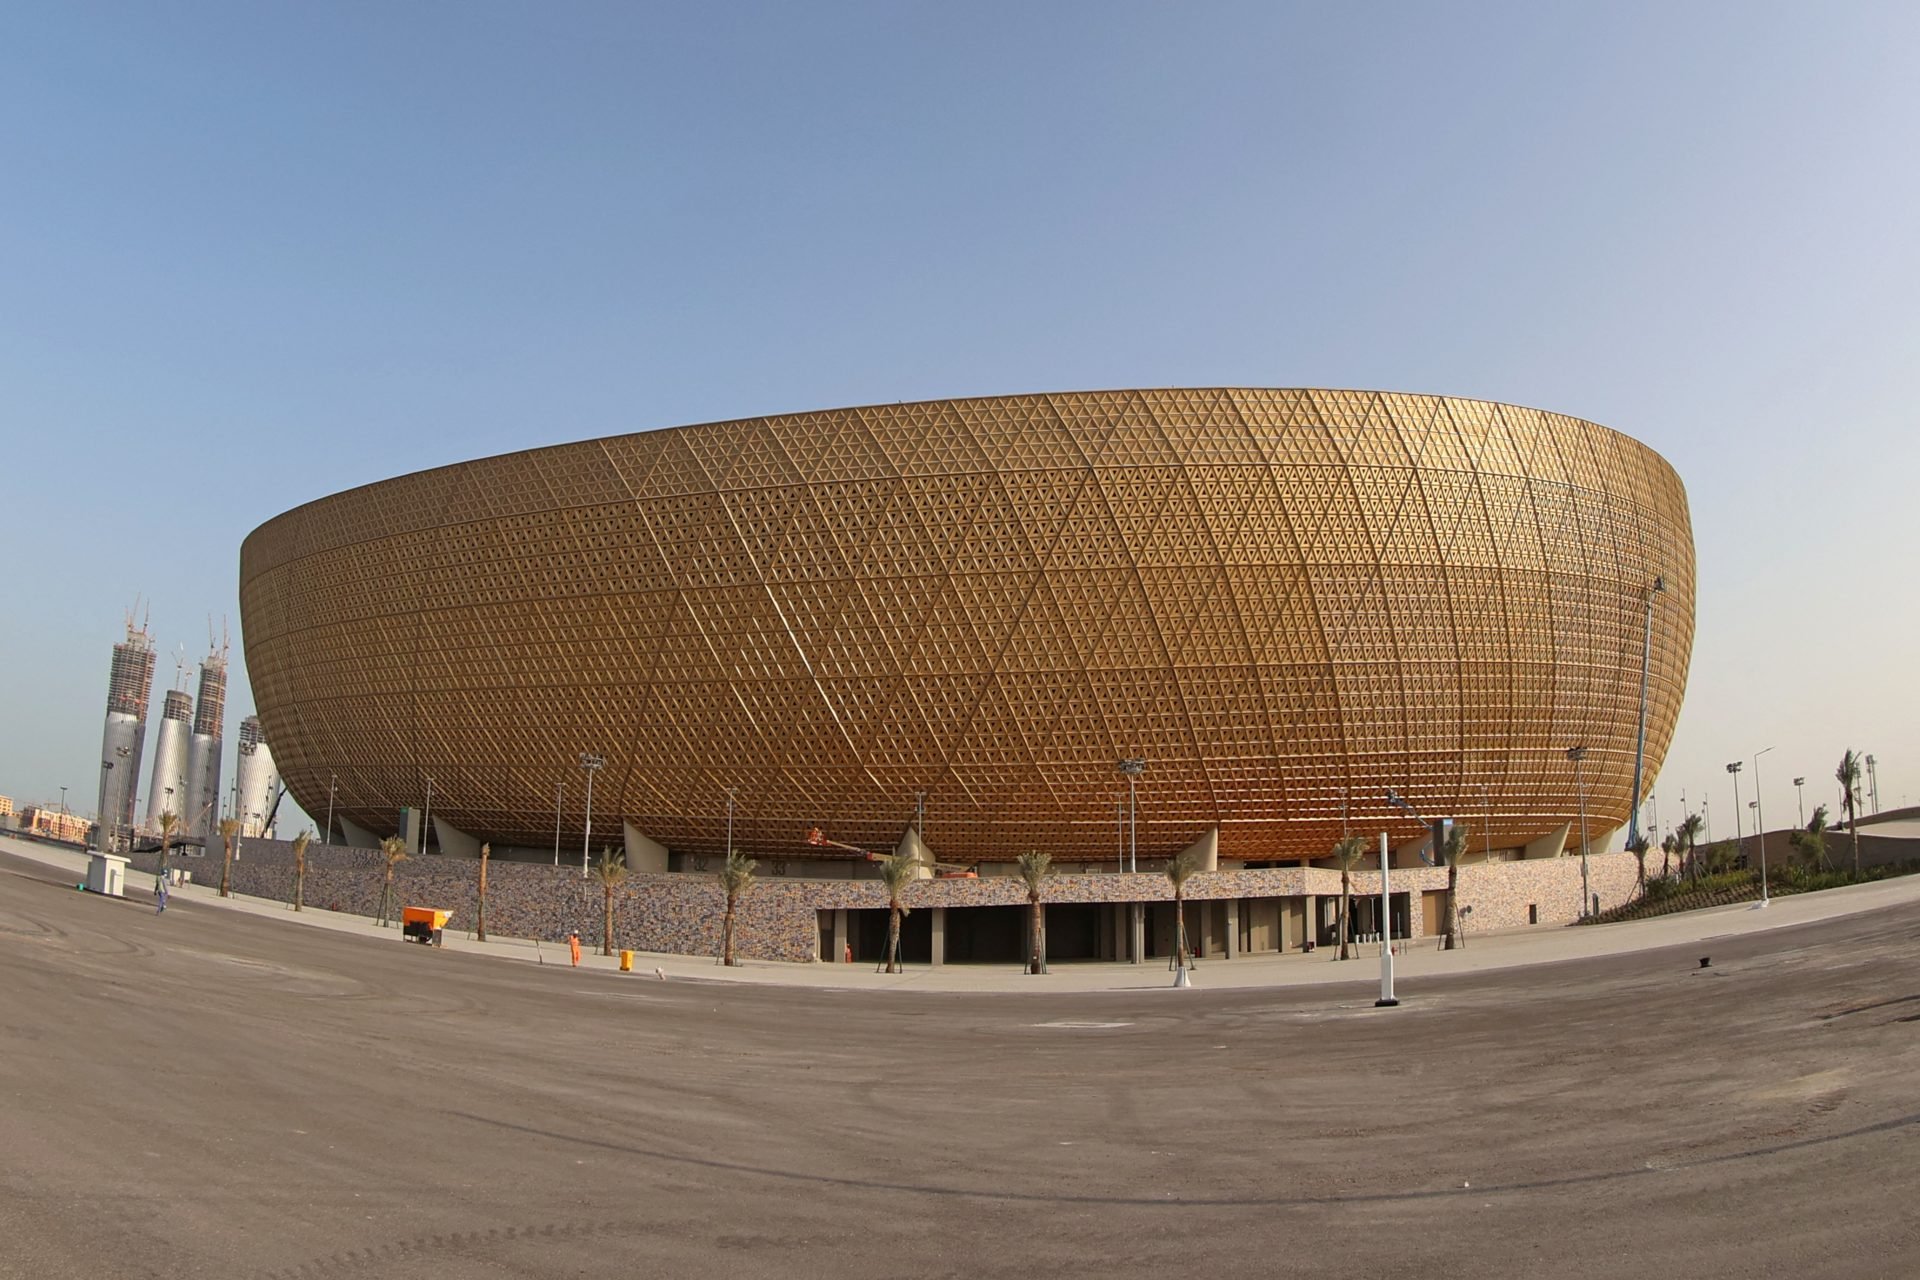 Qatar 2022 Fifa World Cup stadiums: Grounds, capacity explained